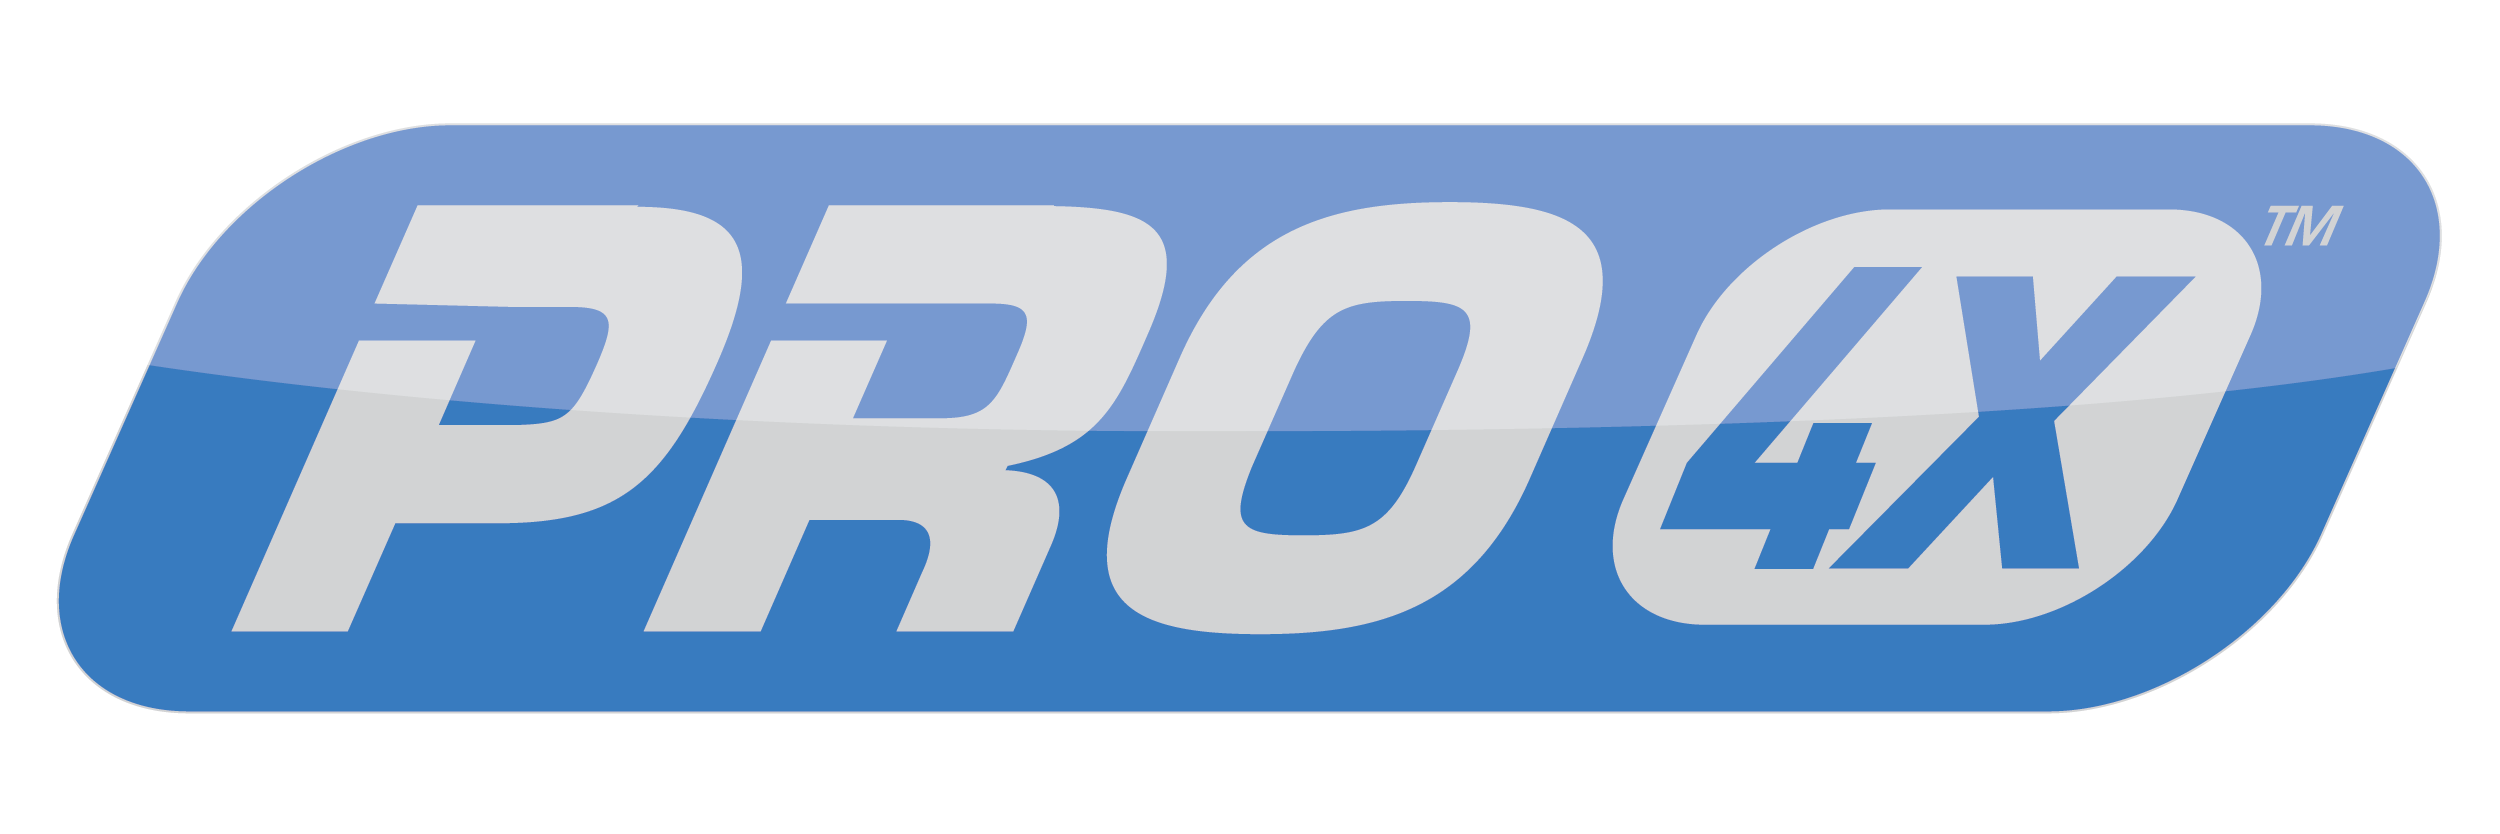 Logo pro4x